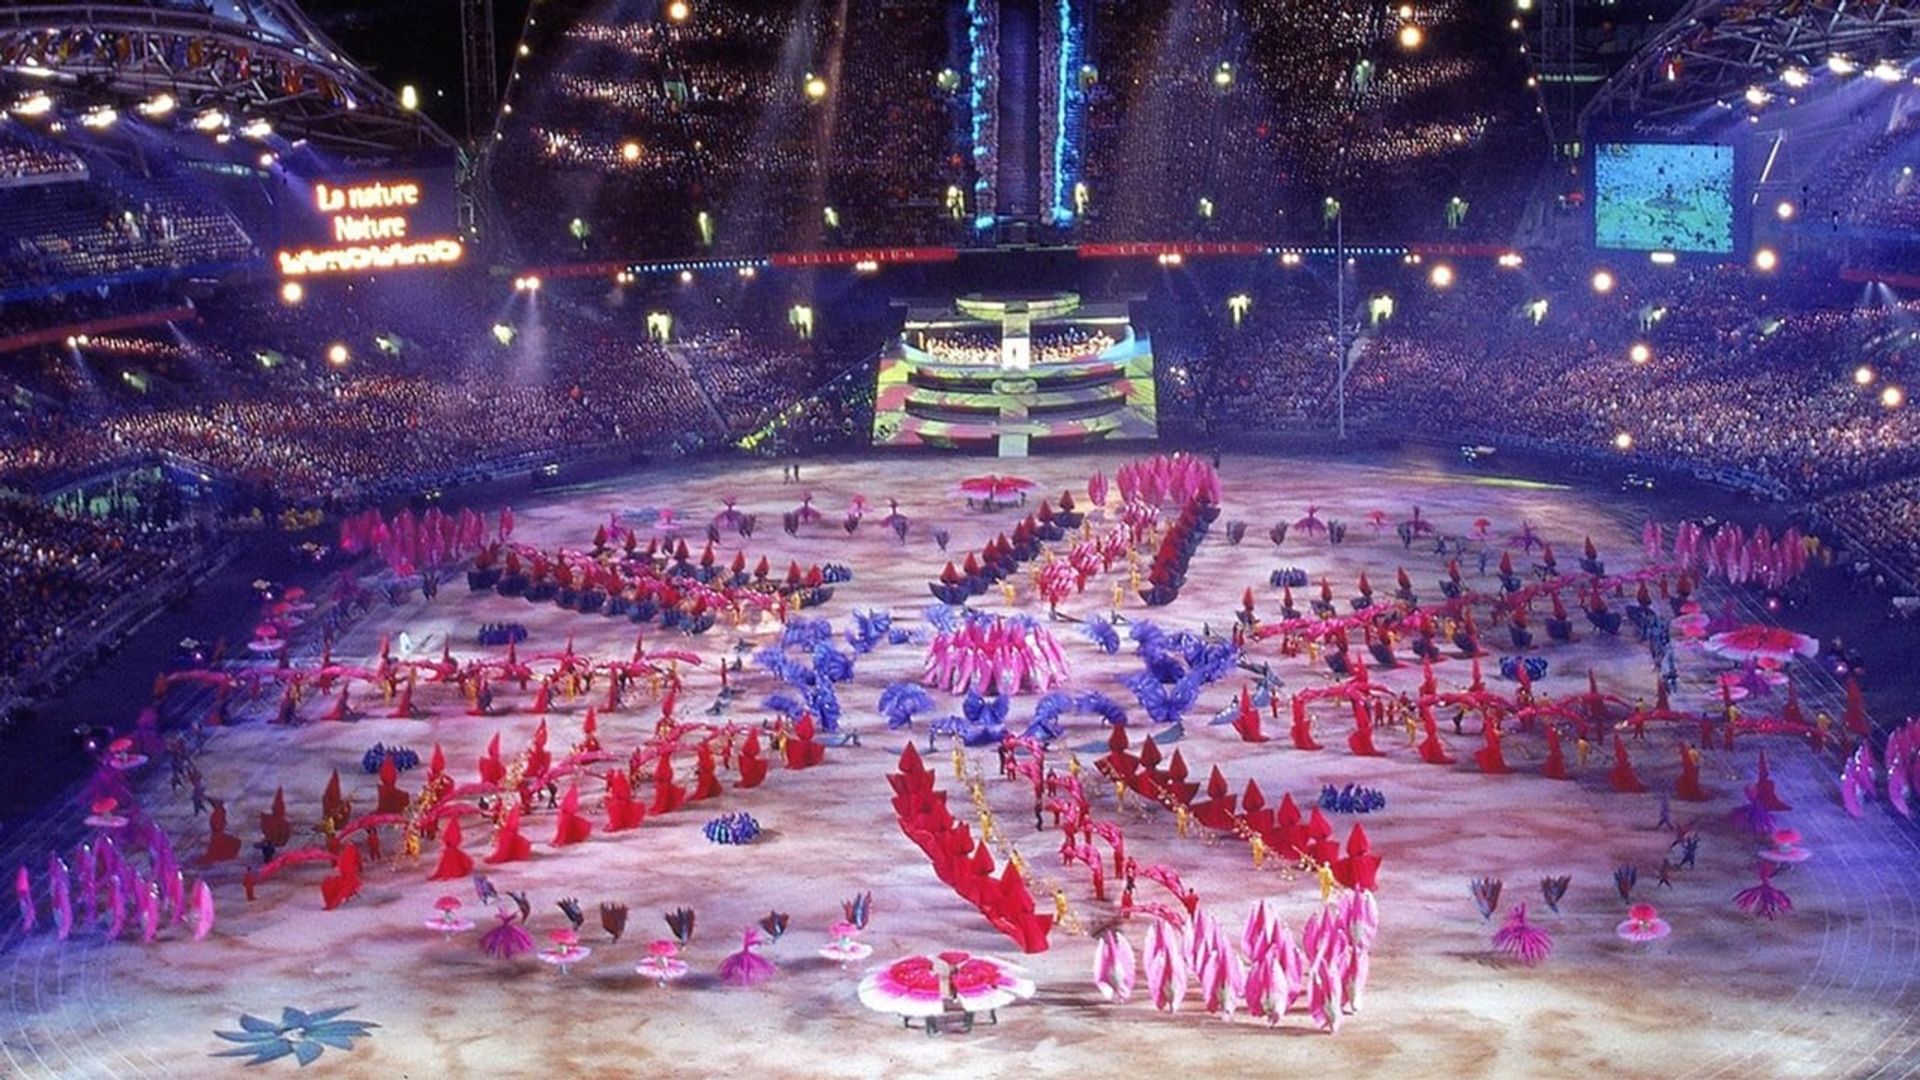 Sydney 2000 Olympics Opening Ceremony background